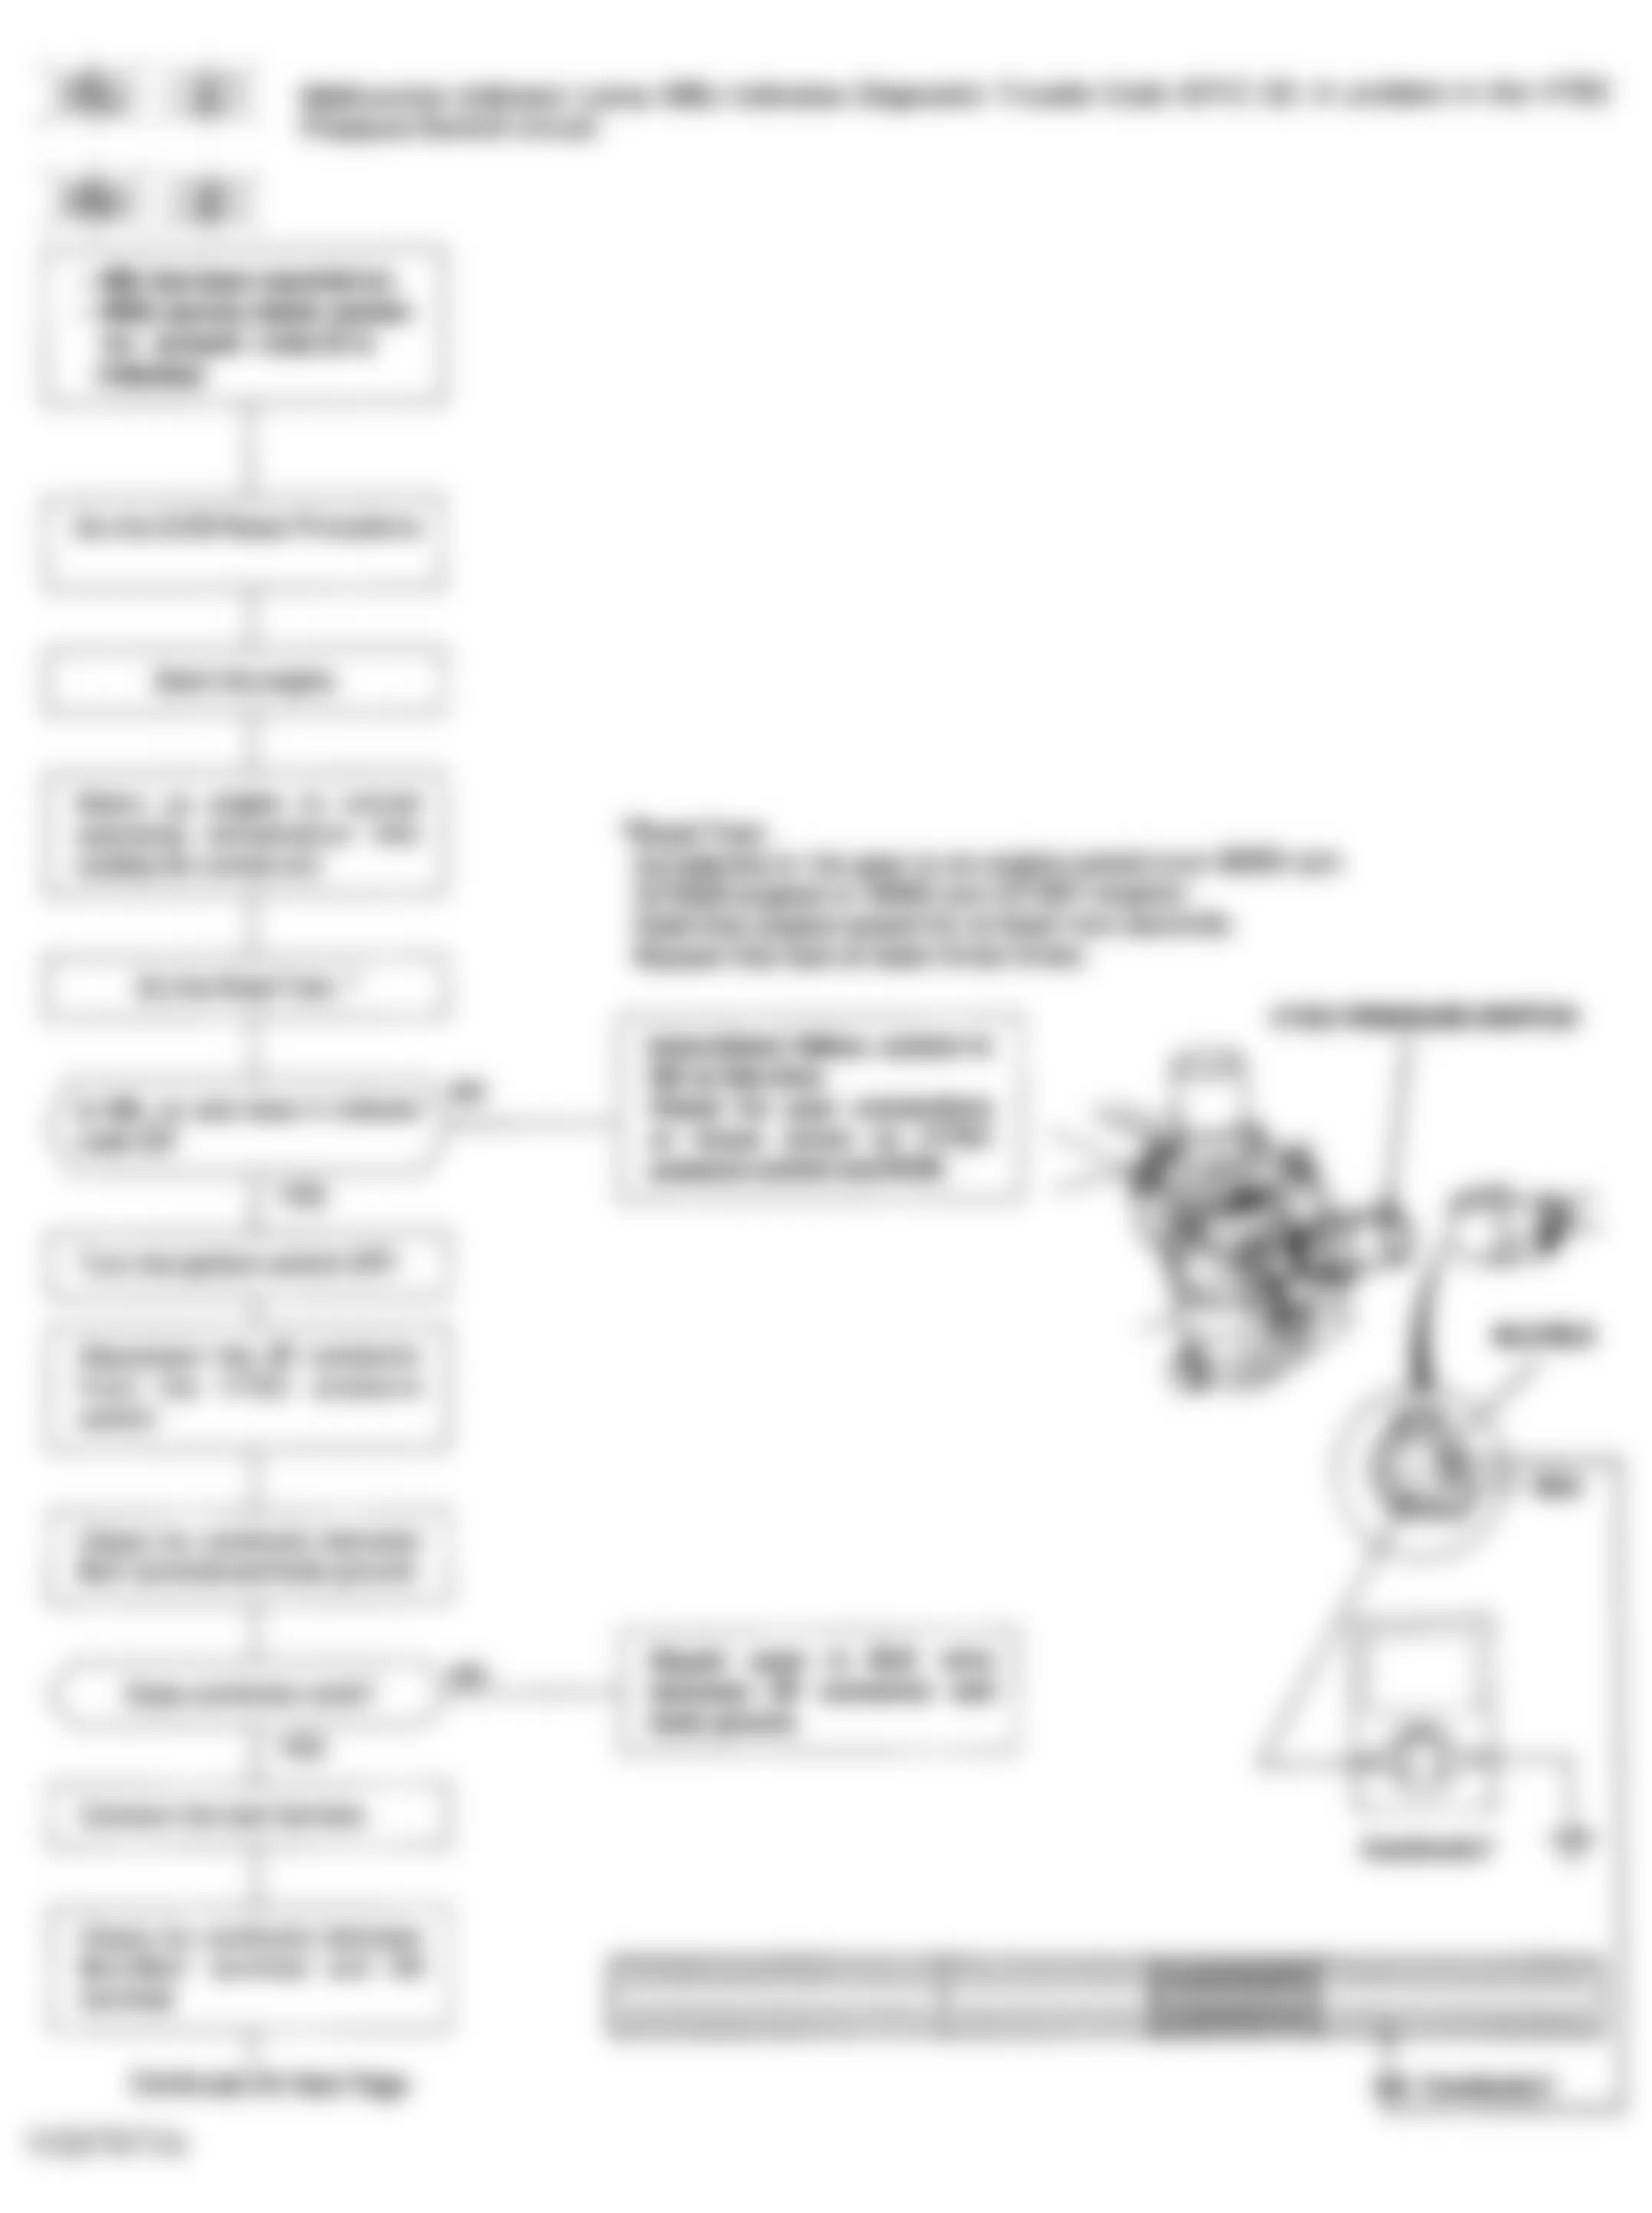 Honda Civic LX 1993 - Component Locations -  Code 22 Flowchart, VTEC Pressure Switch (1 of 3)